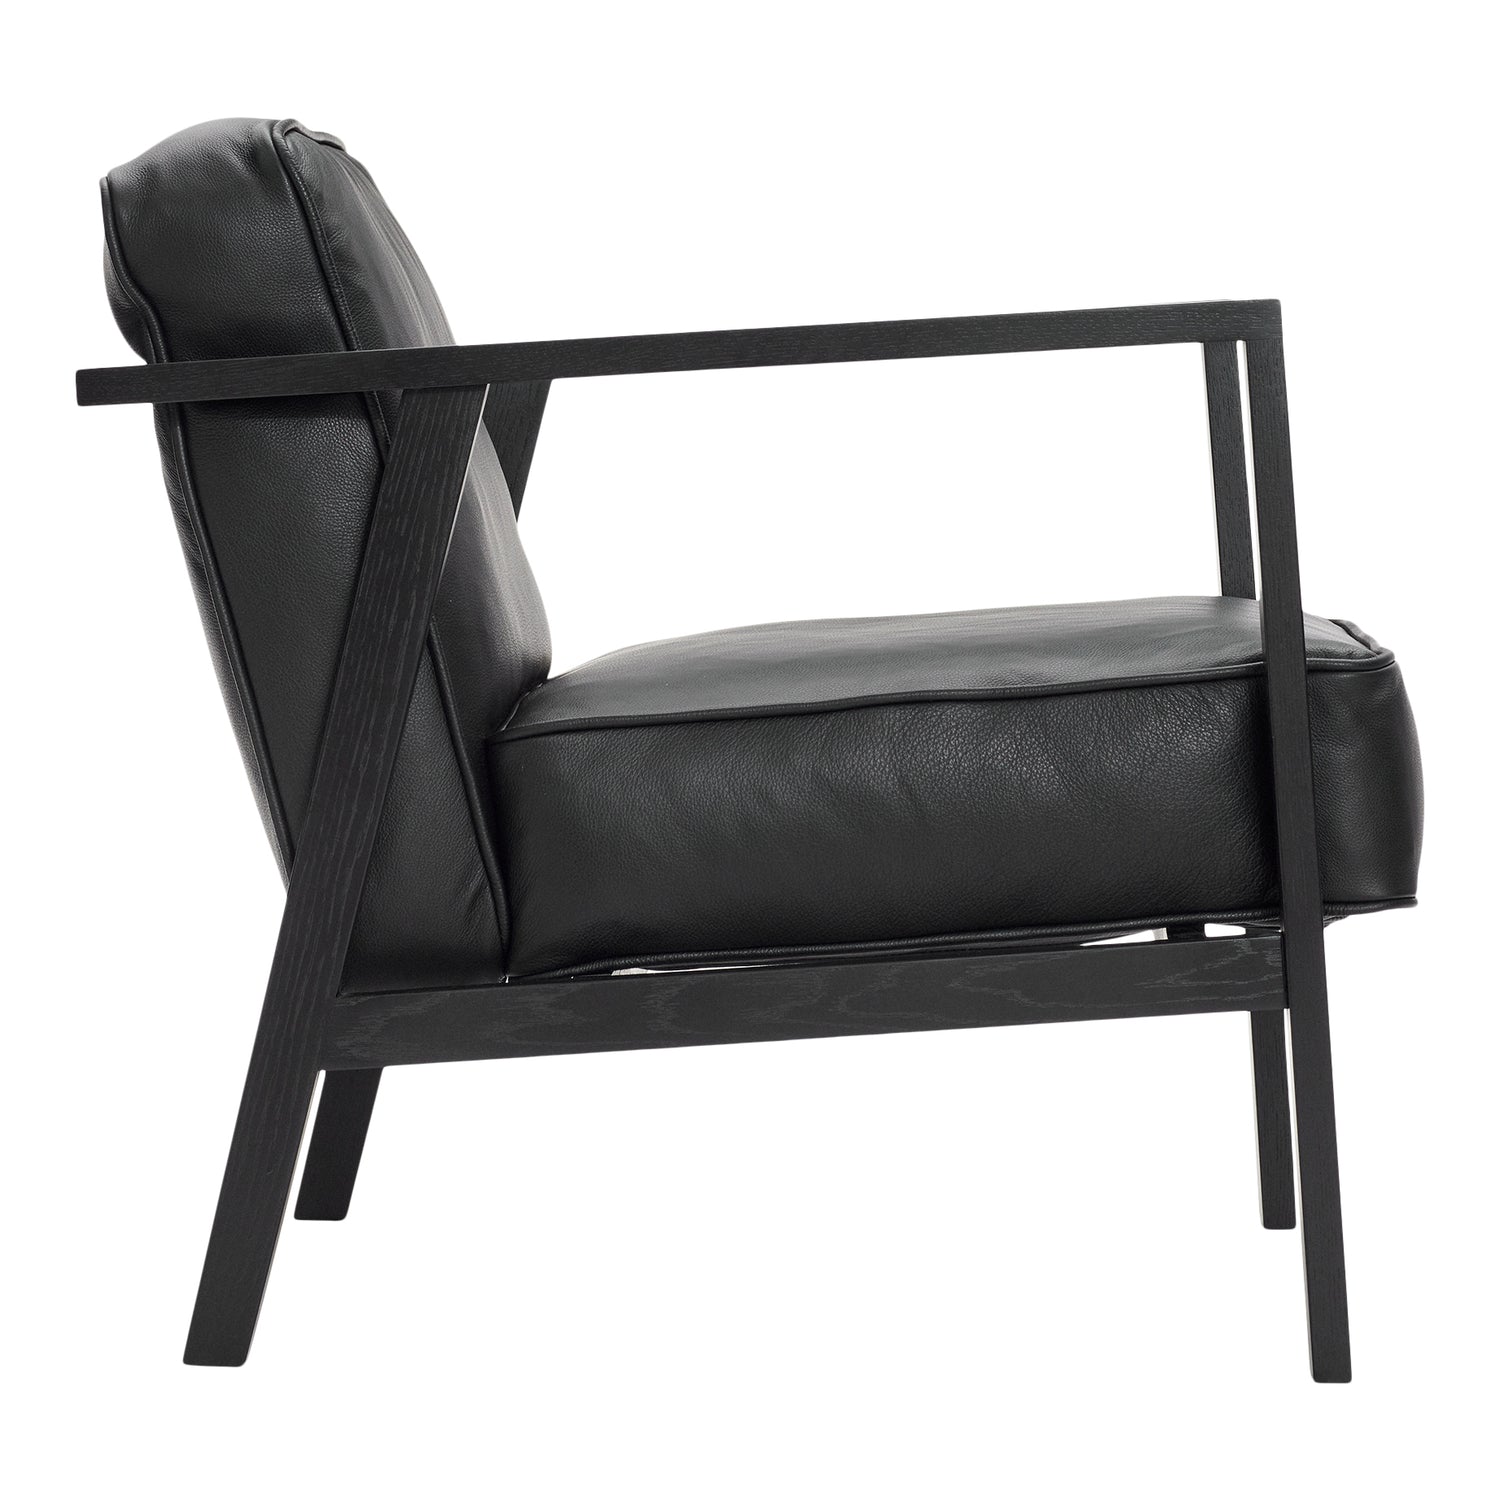 Andersen Furniture - LC1 Lounge Chair - Svart skinn/ramme i svart lakkert